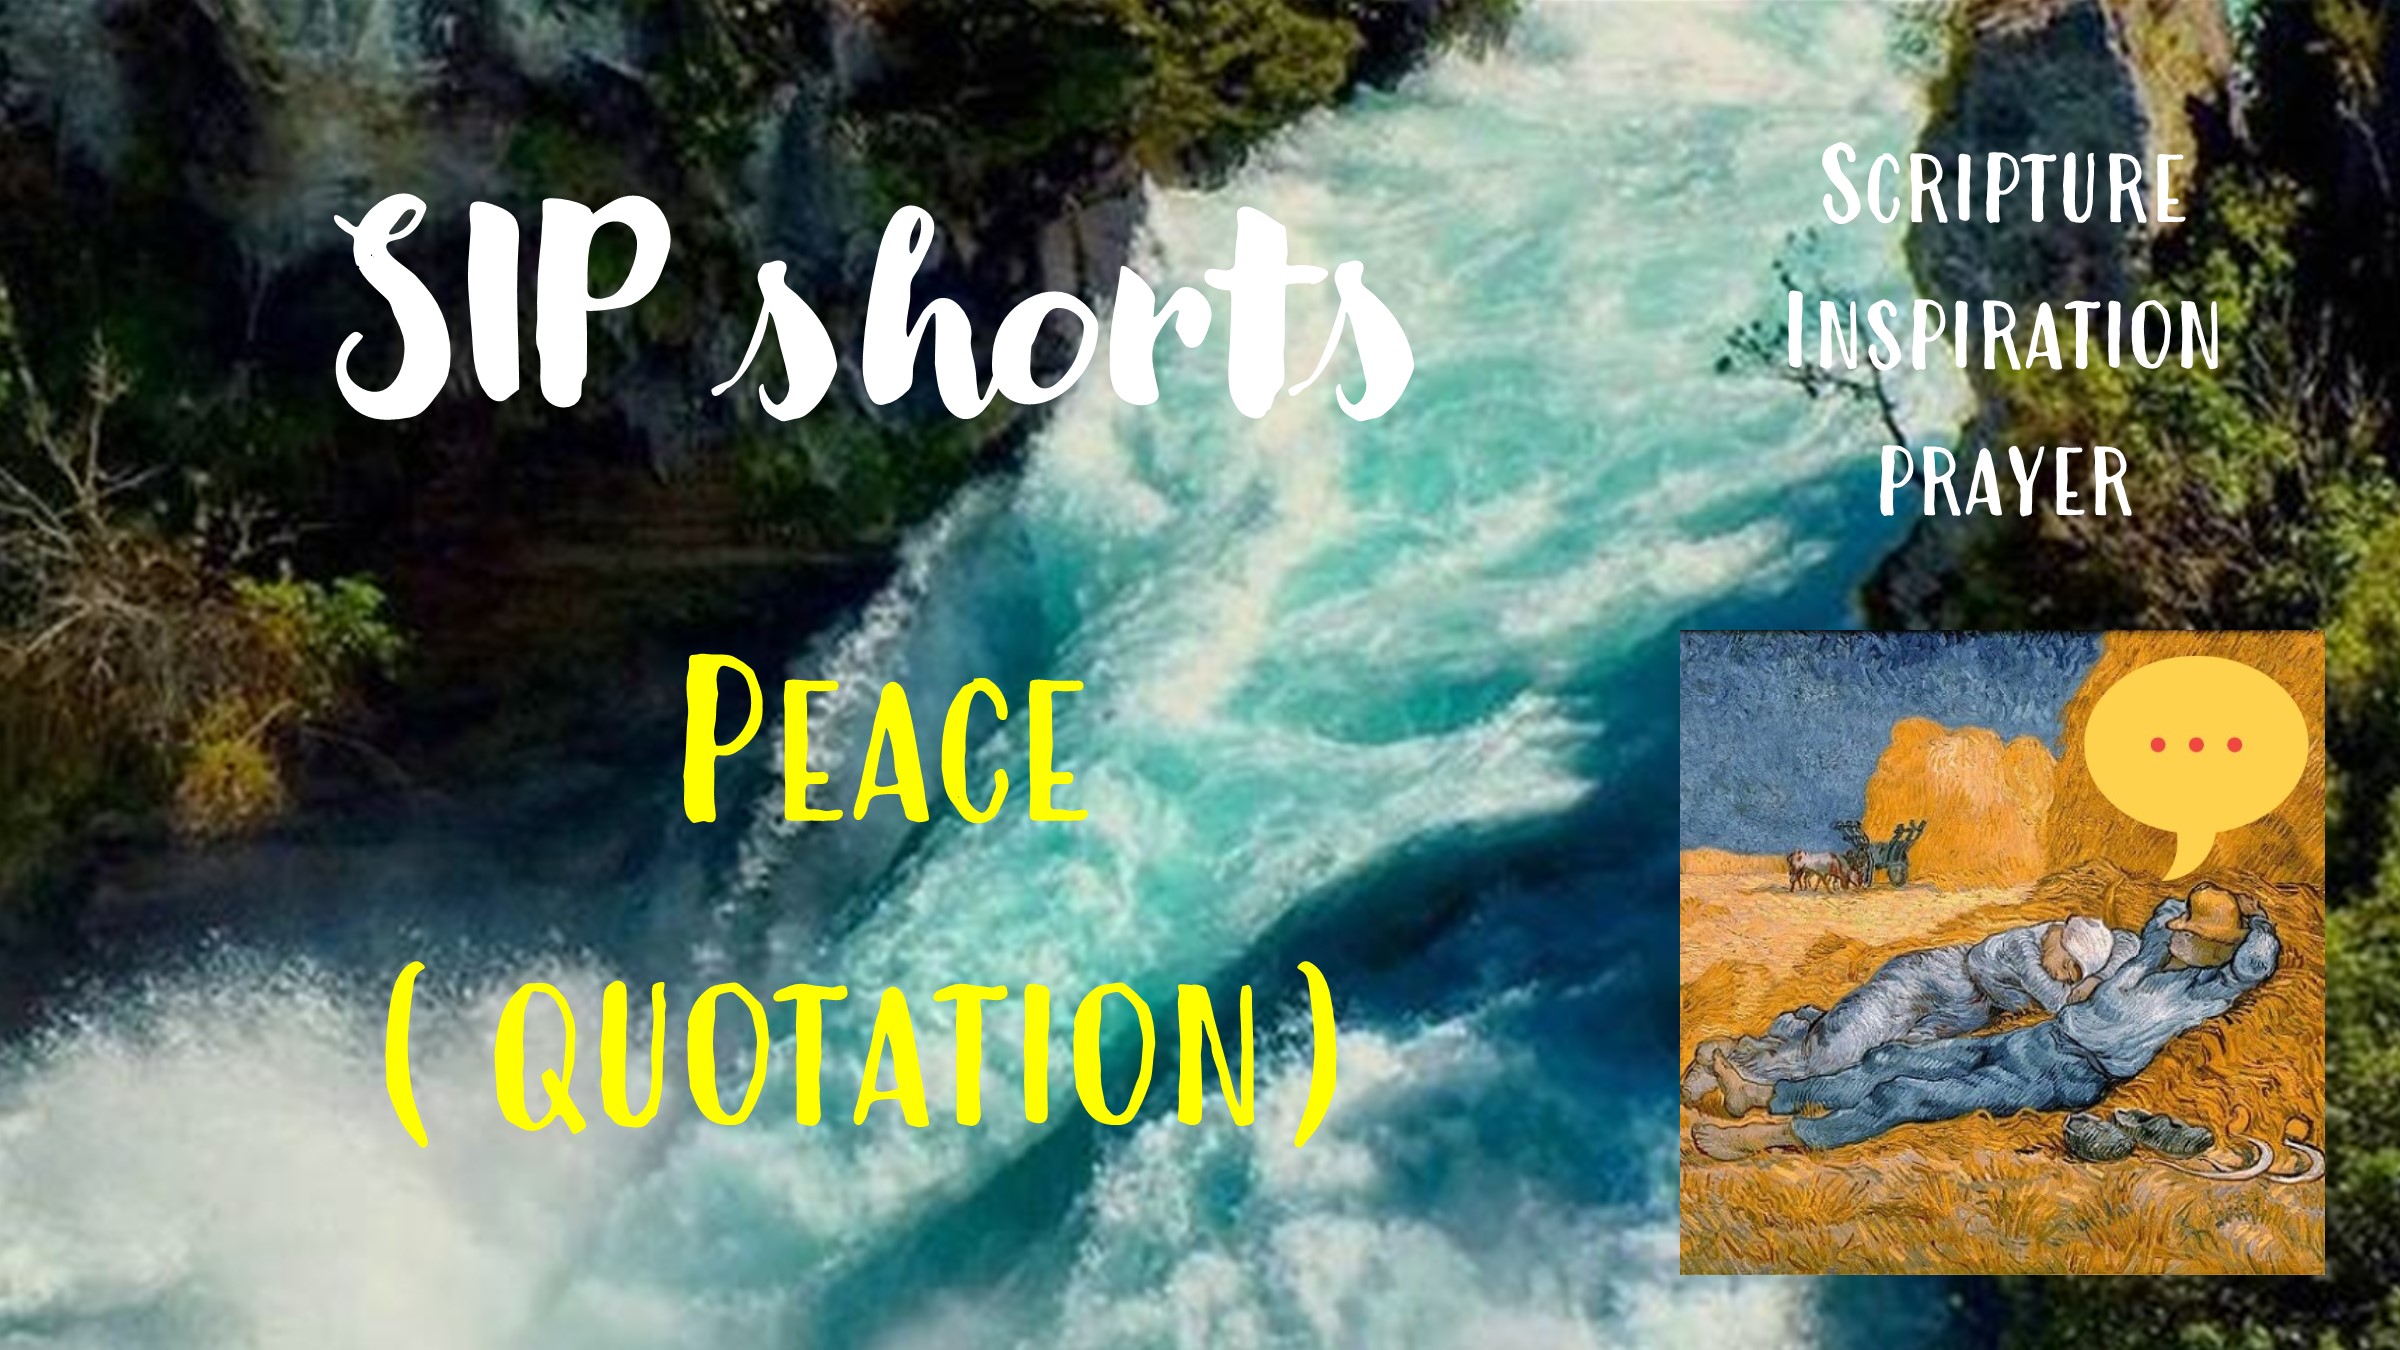 Peace – Quotation SIP #shorts (Scripture, Inspiration, Prayer – devotions on God’s attributes)